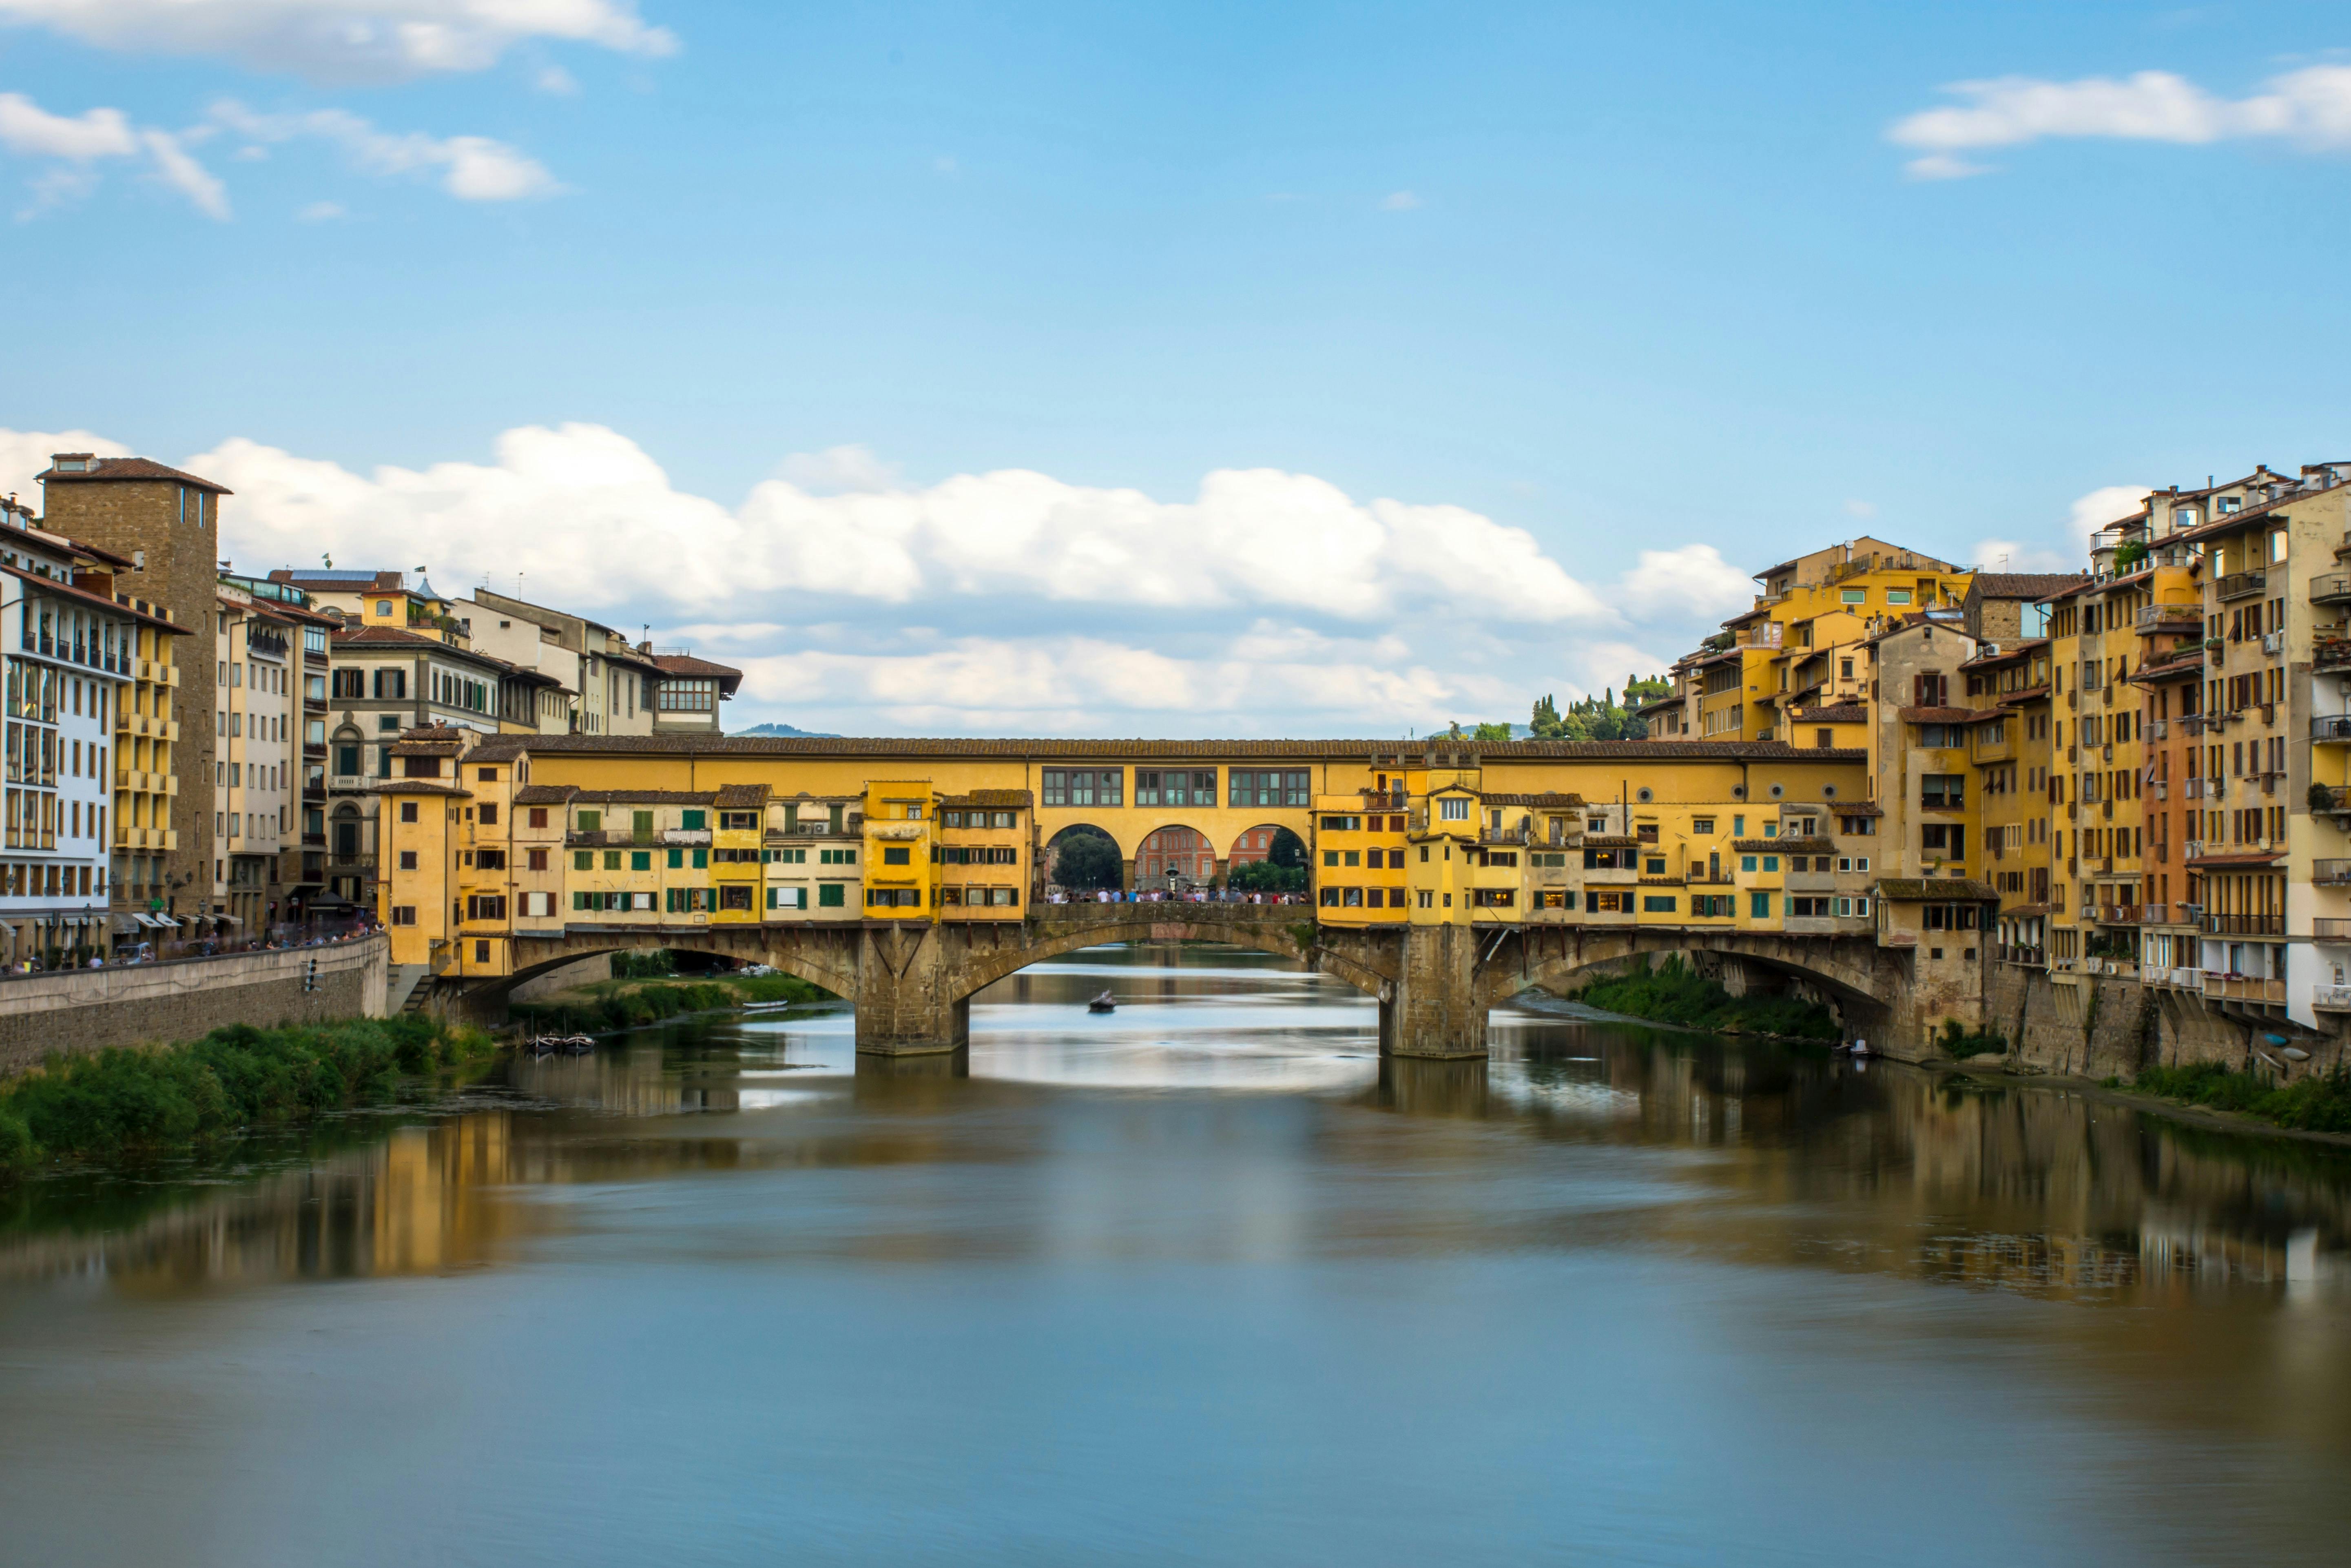 Ponte Vecciho bridge in Florence, Italy